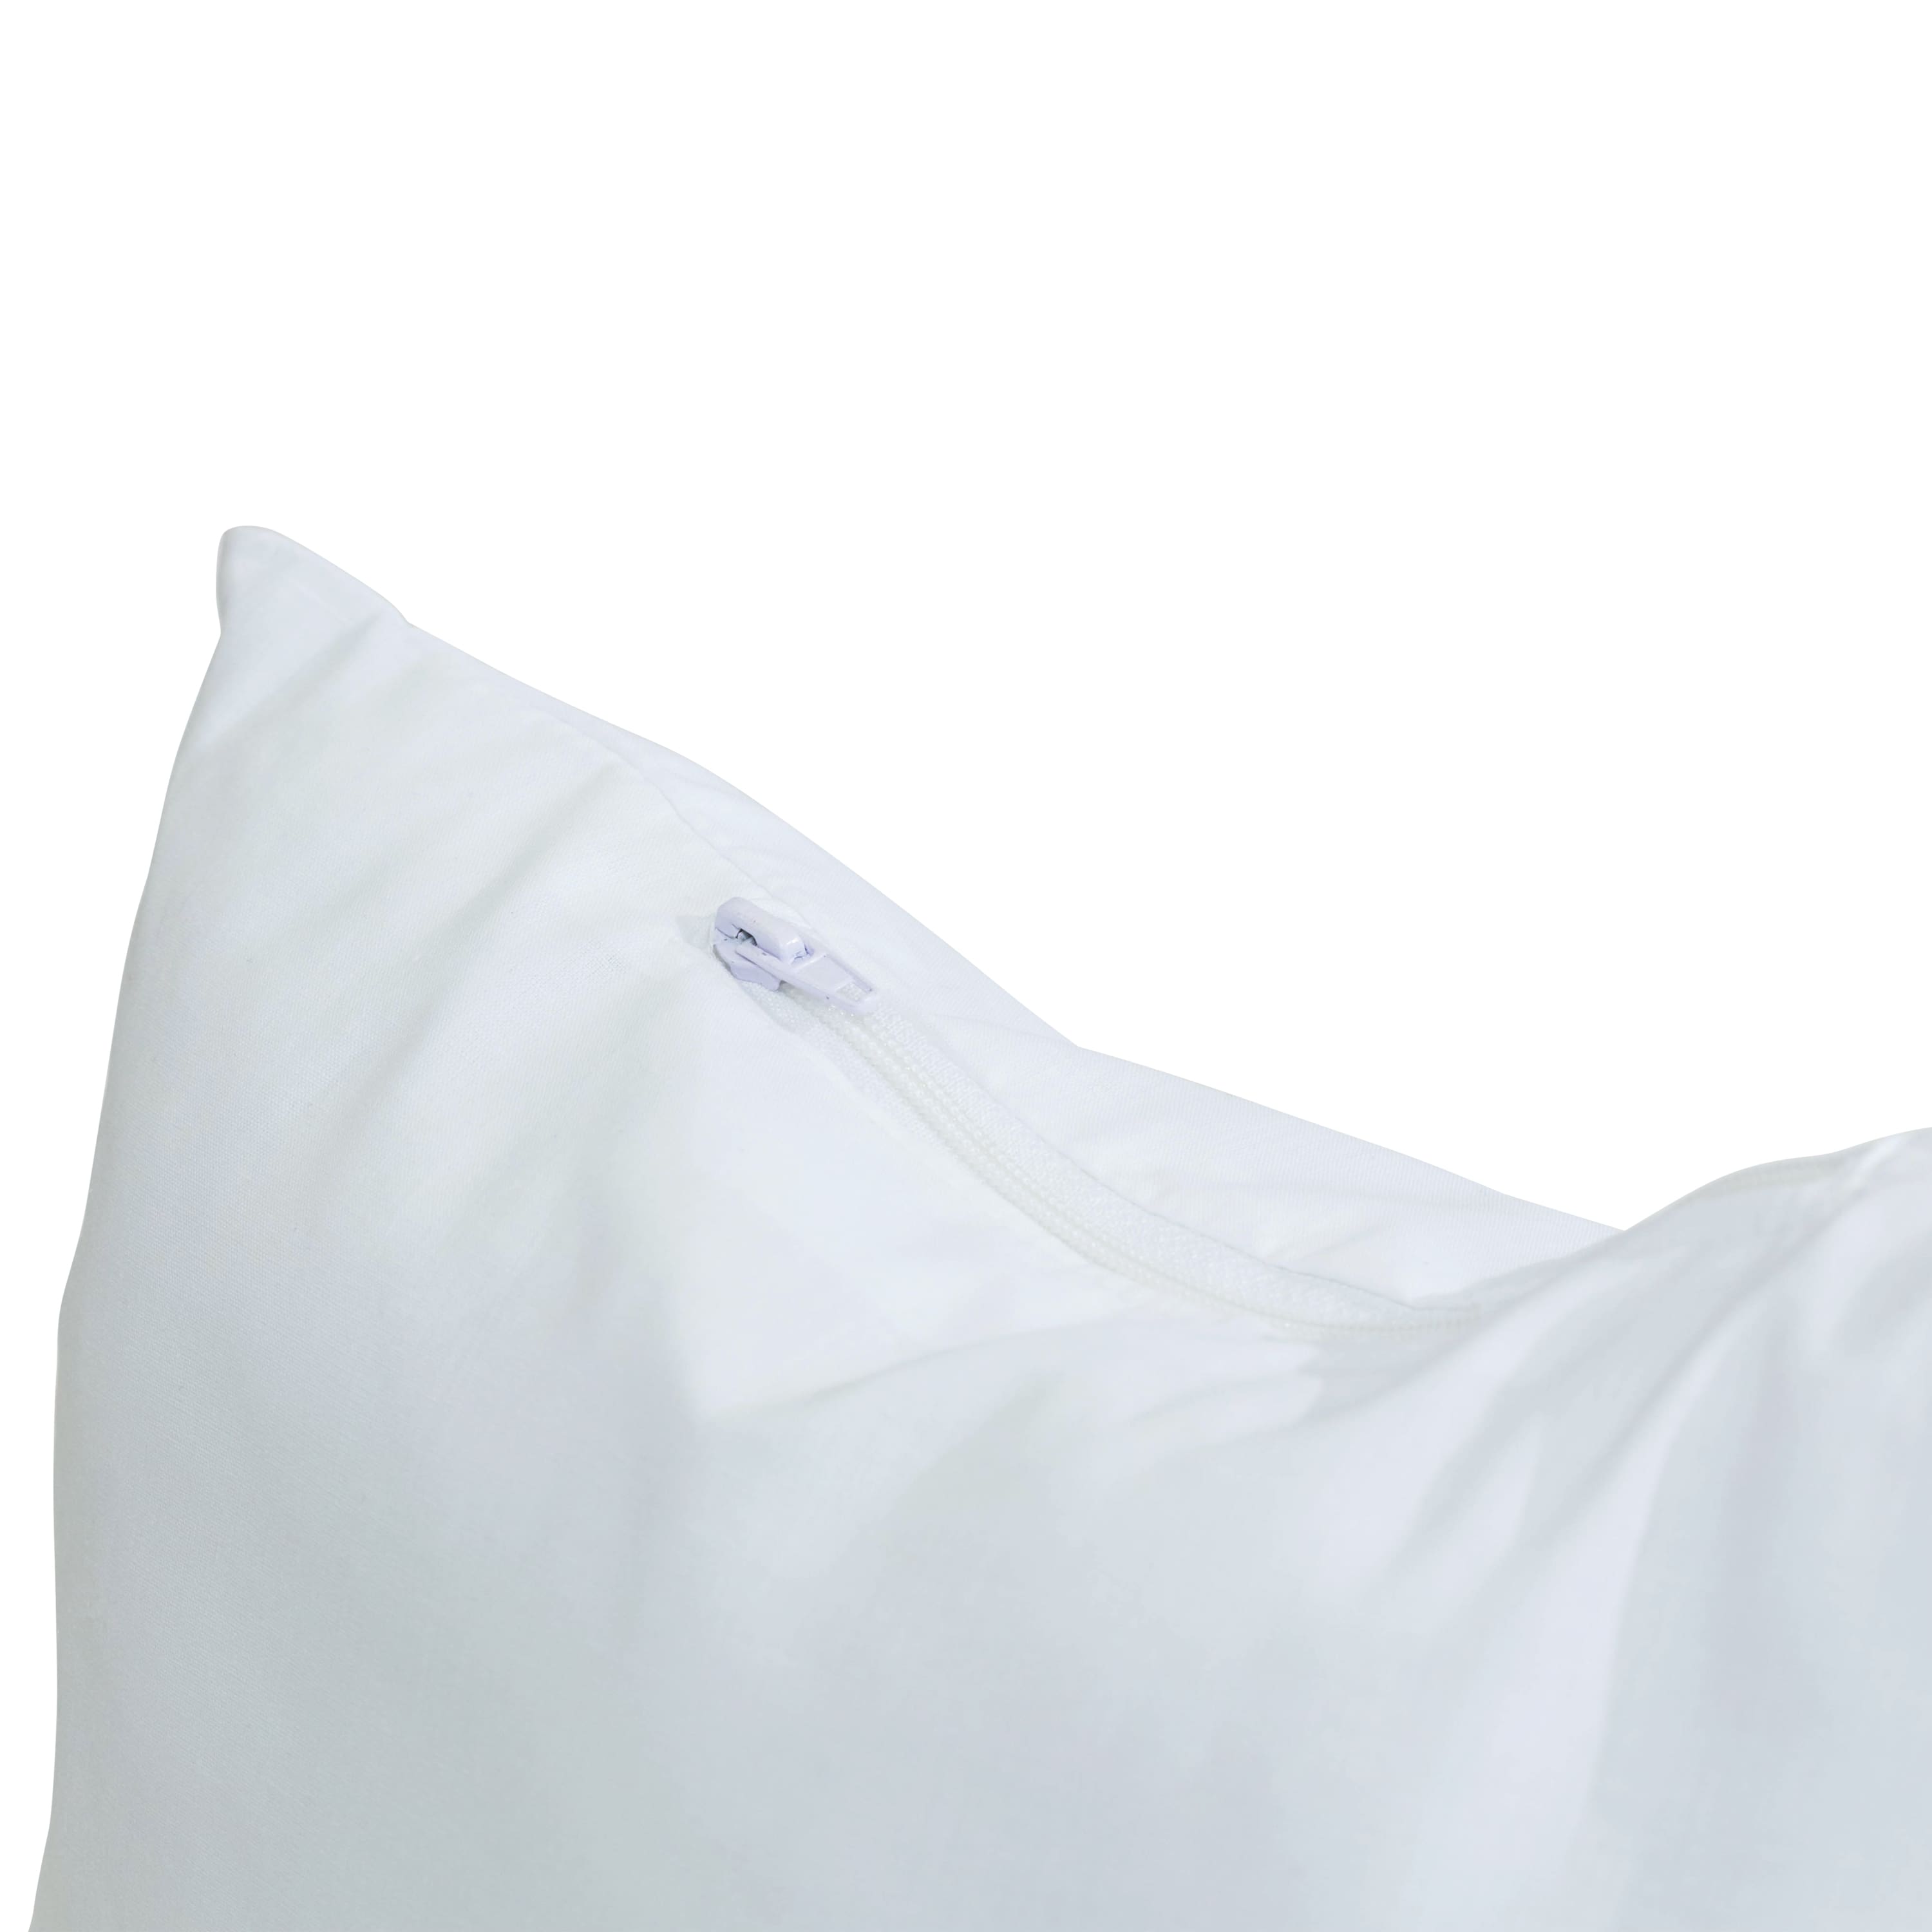 Poly-fil&#xAE; Premier&#x2122; Oversize Pillow Insert, 22&#x22; x 22&#x22;